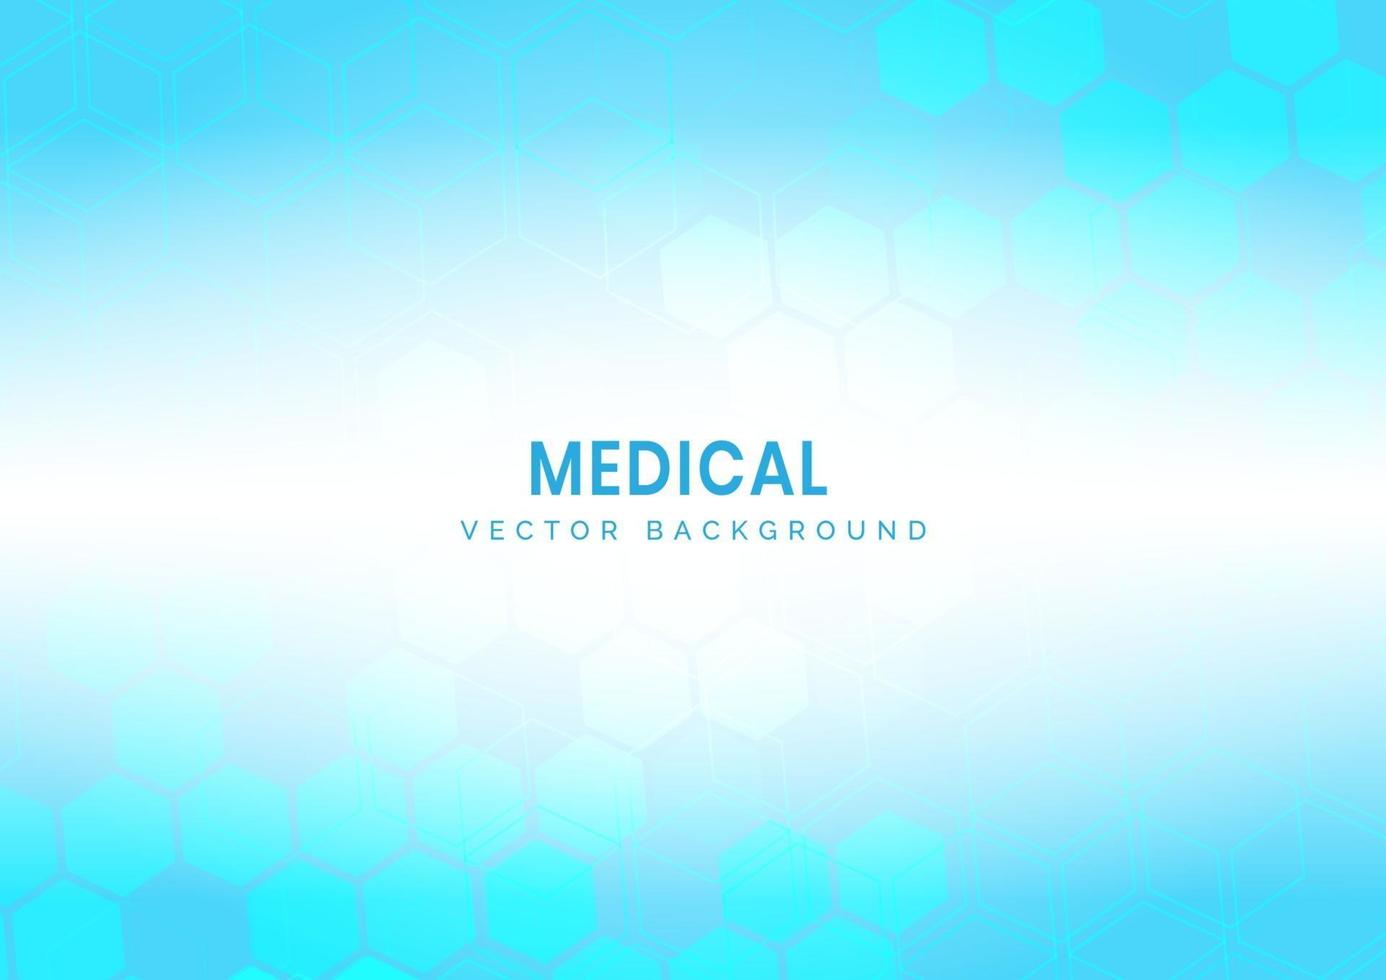 Patrón hexagonal abstracto fondo azul claro concepto médico y científico. vector